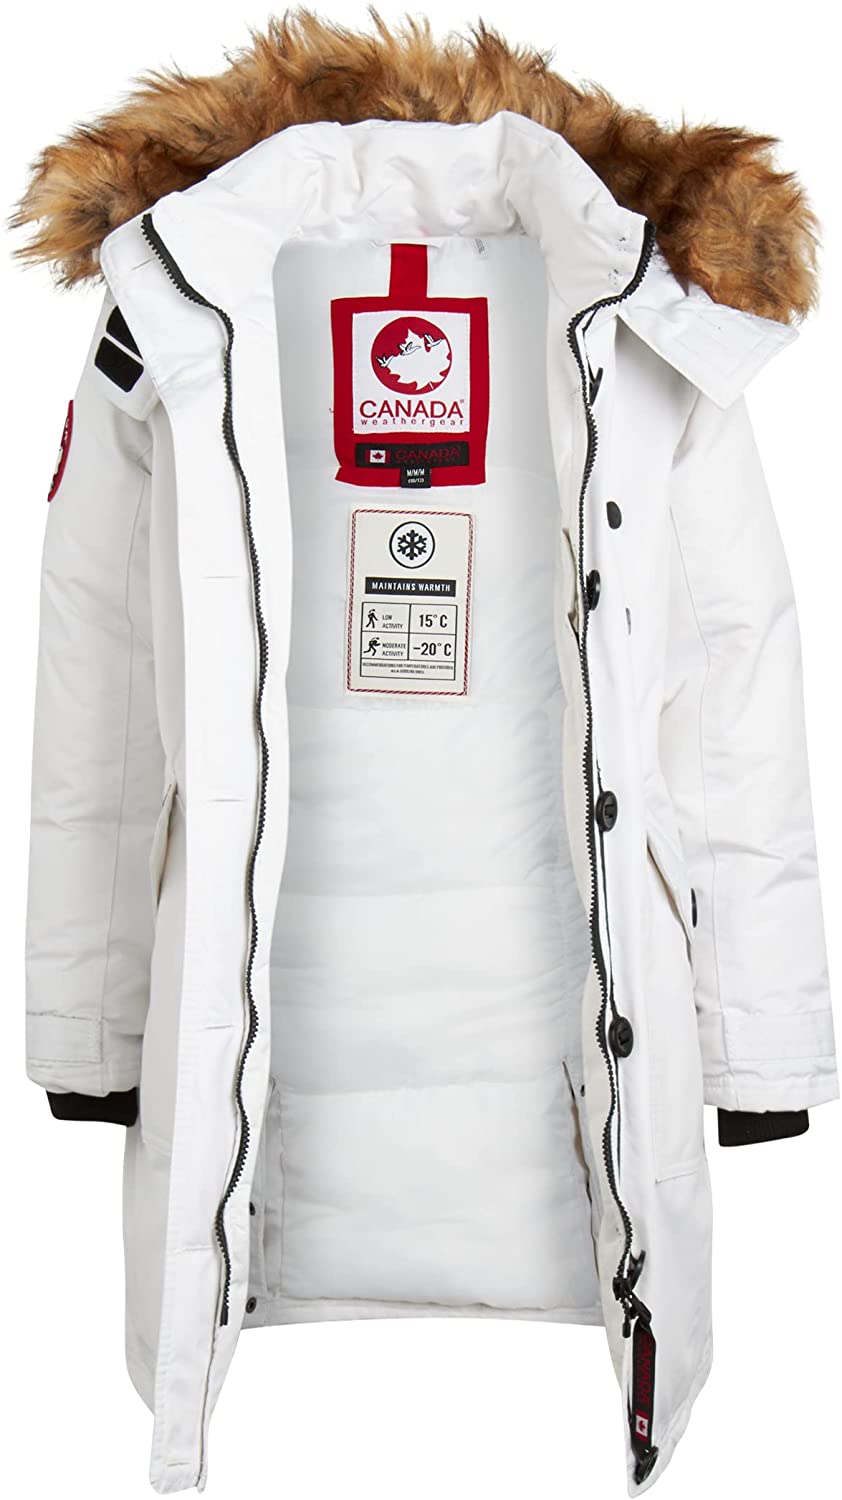 Canada Weather Gear Girls Longline Stadium Expedition Parka Coat